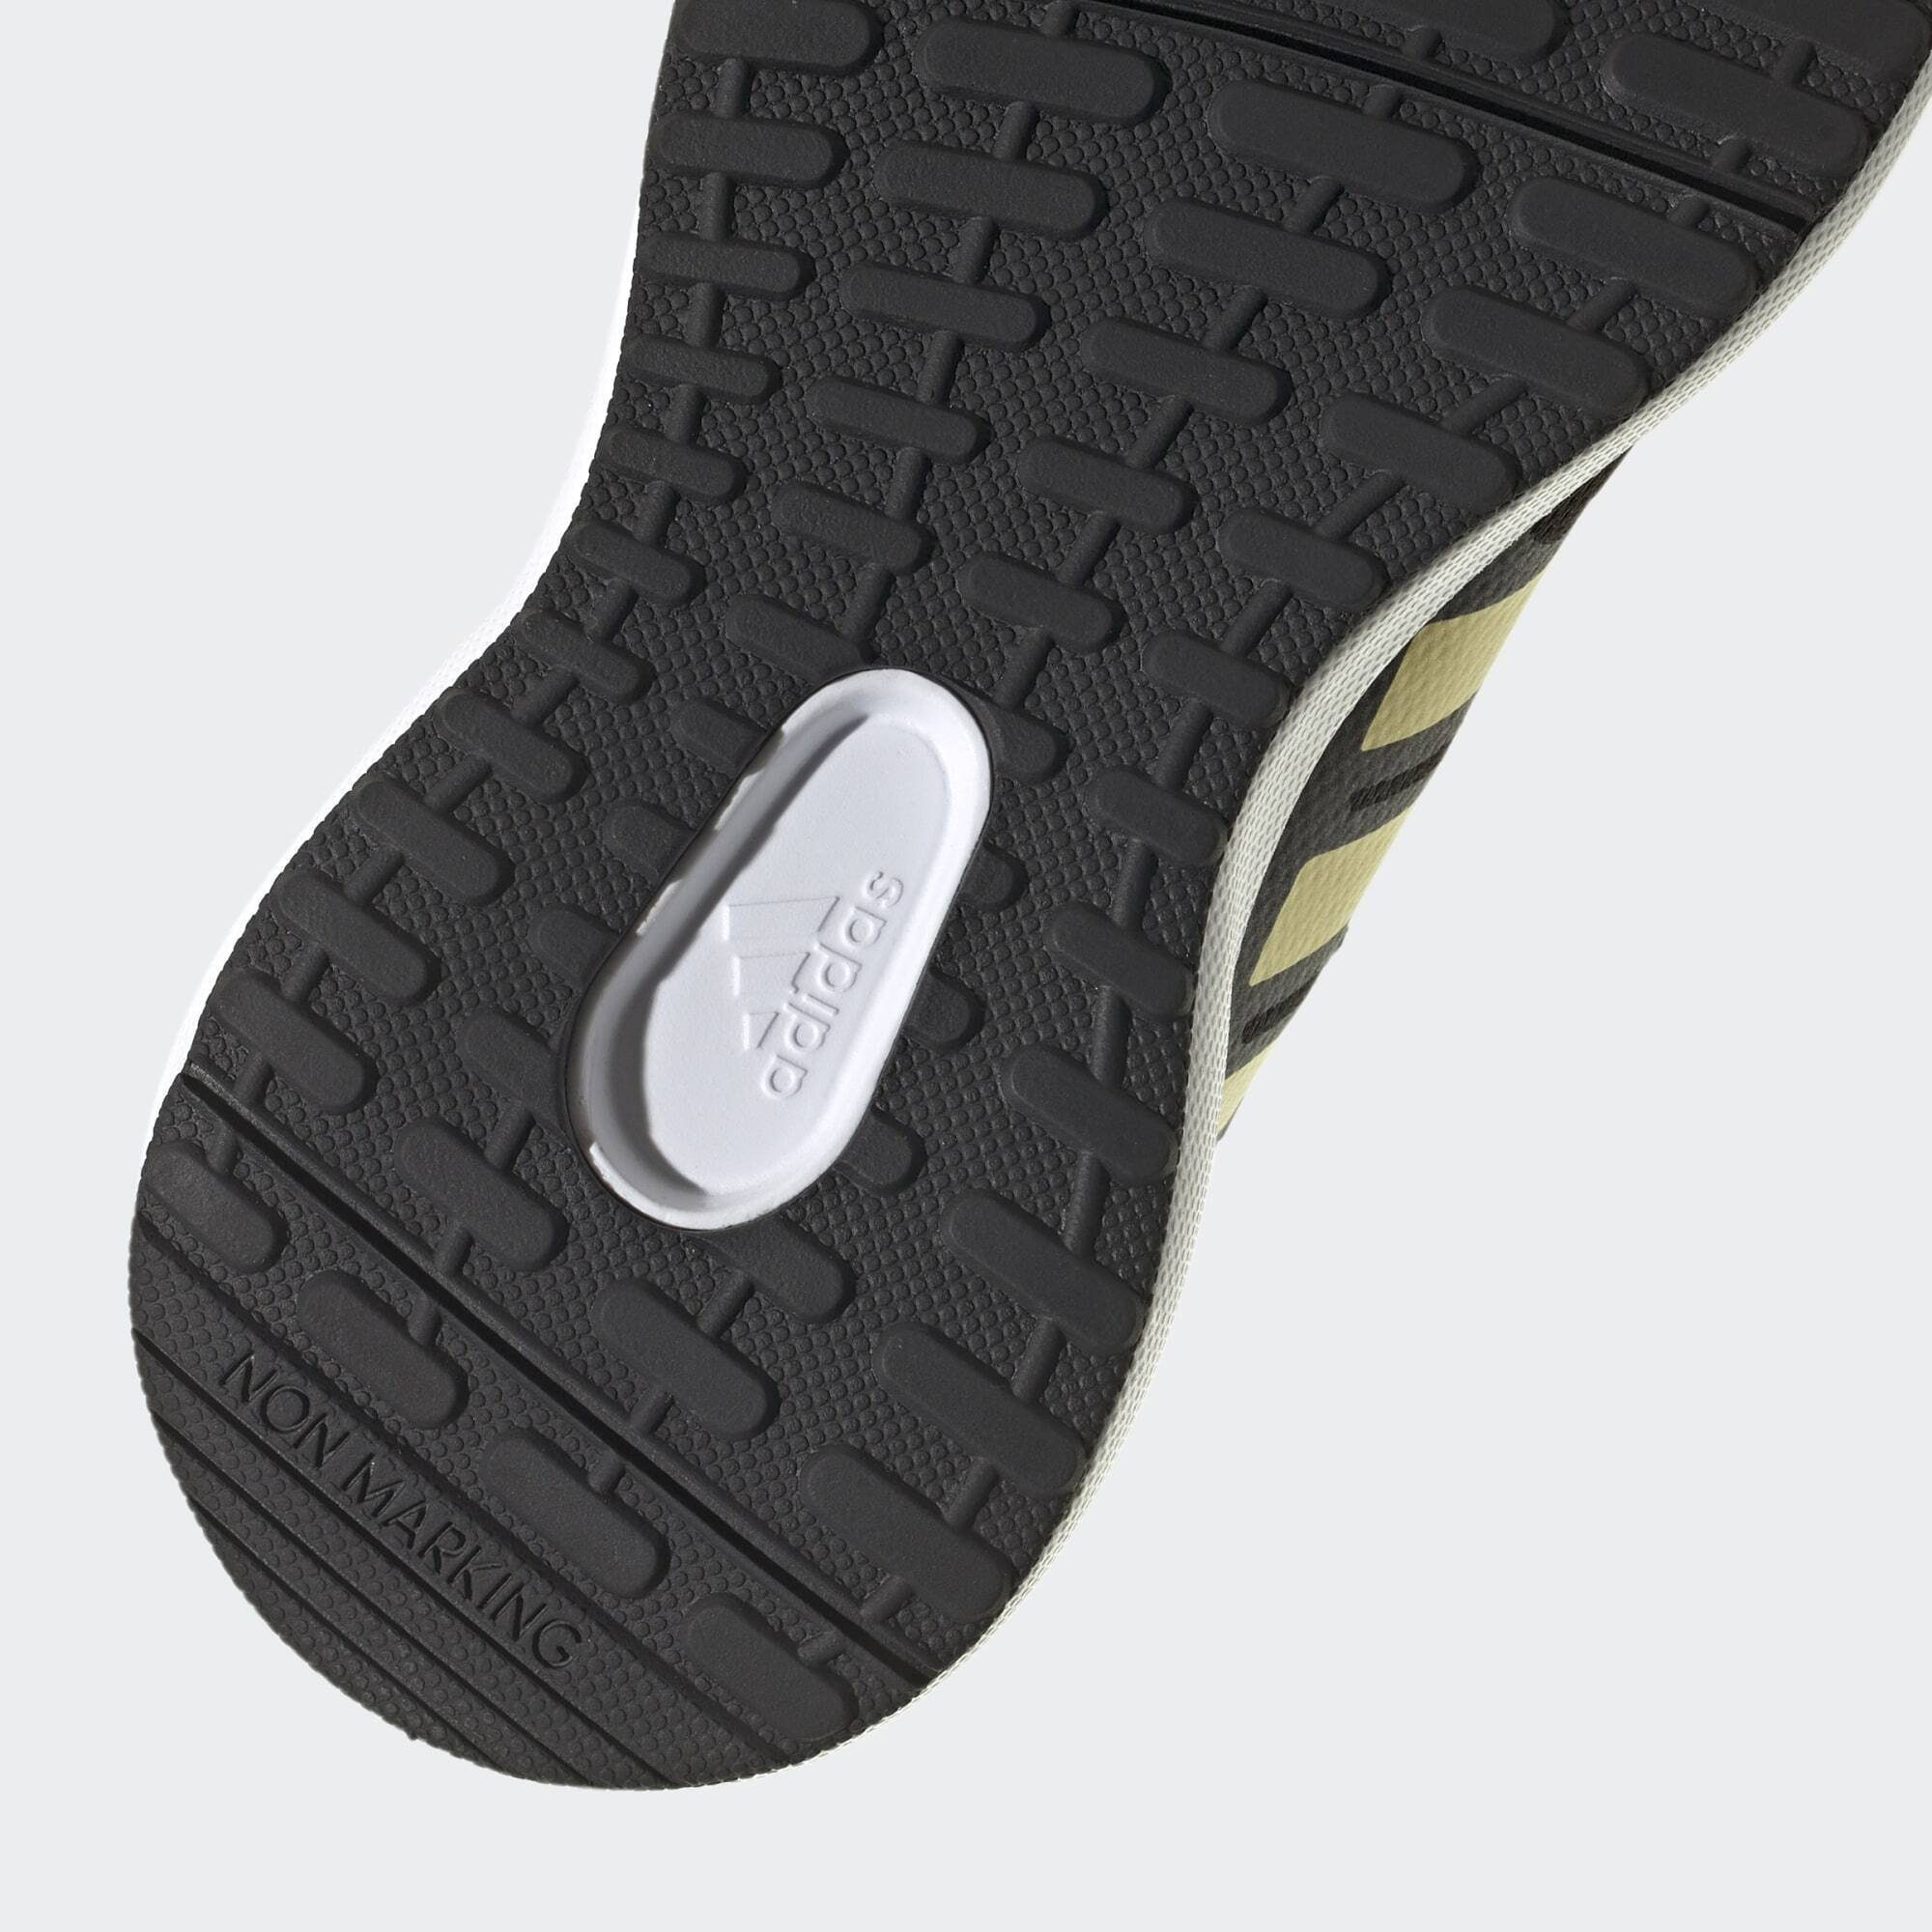 LACE CLOUDFOAM / Sportswear Cloud White / Gold Black FORTARUN adidas Metallic Core 2.0 Sneaker SCHUH